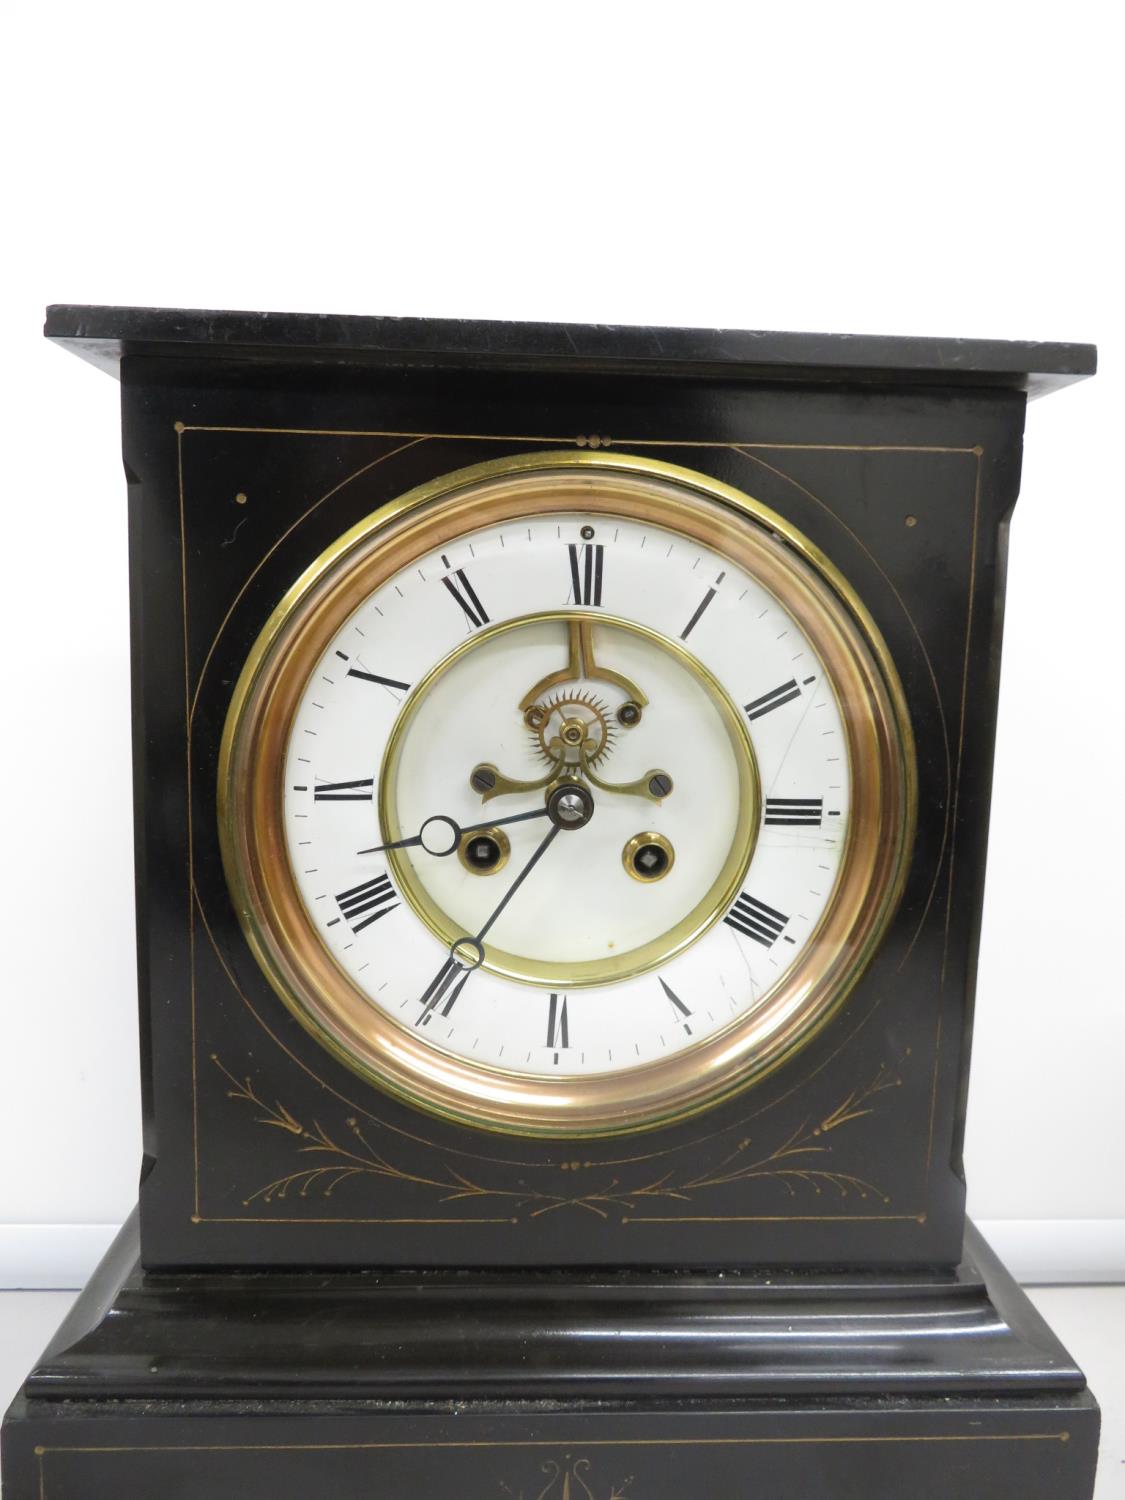 13" high 6" dial Breguet mantle clock - clock runs - Image 2 of 3